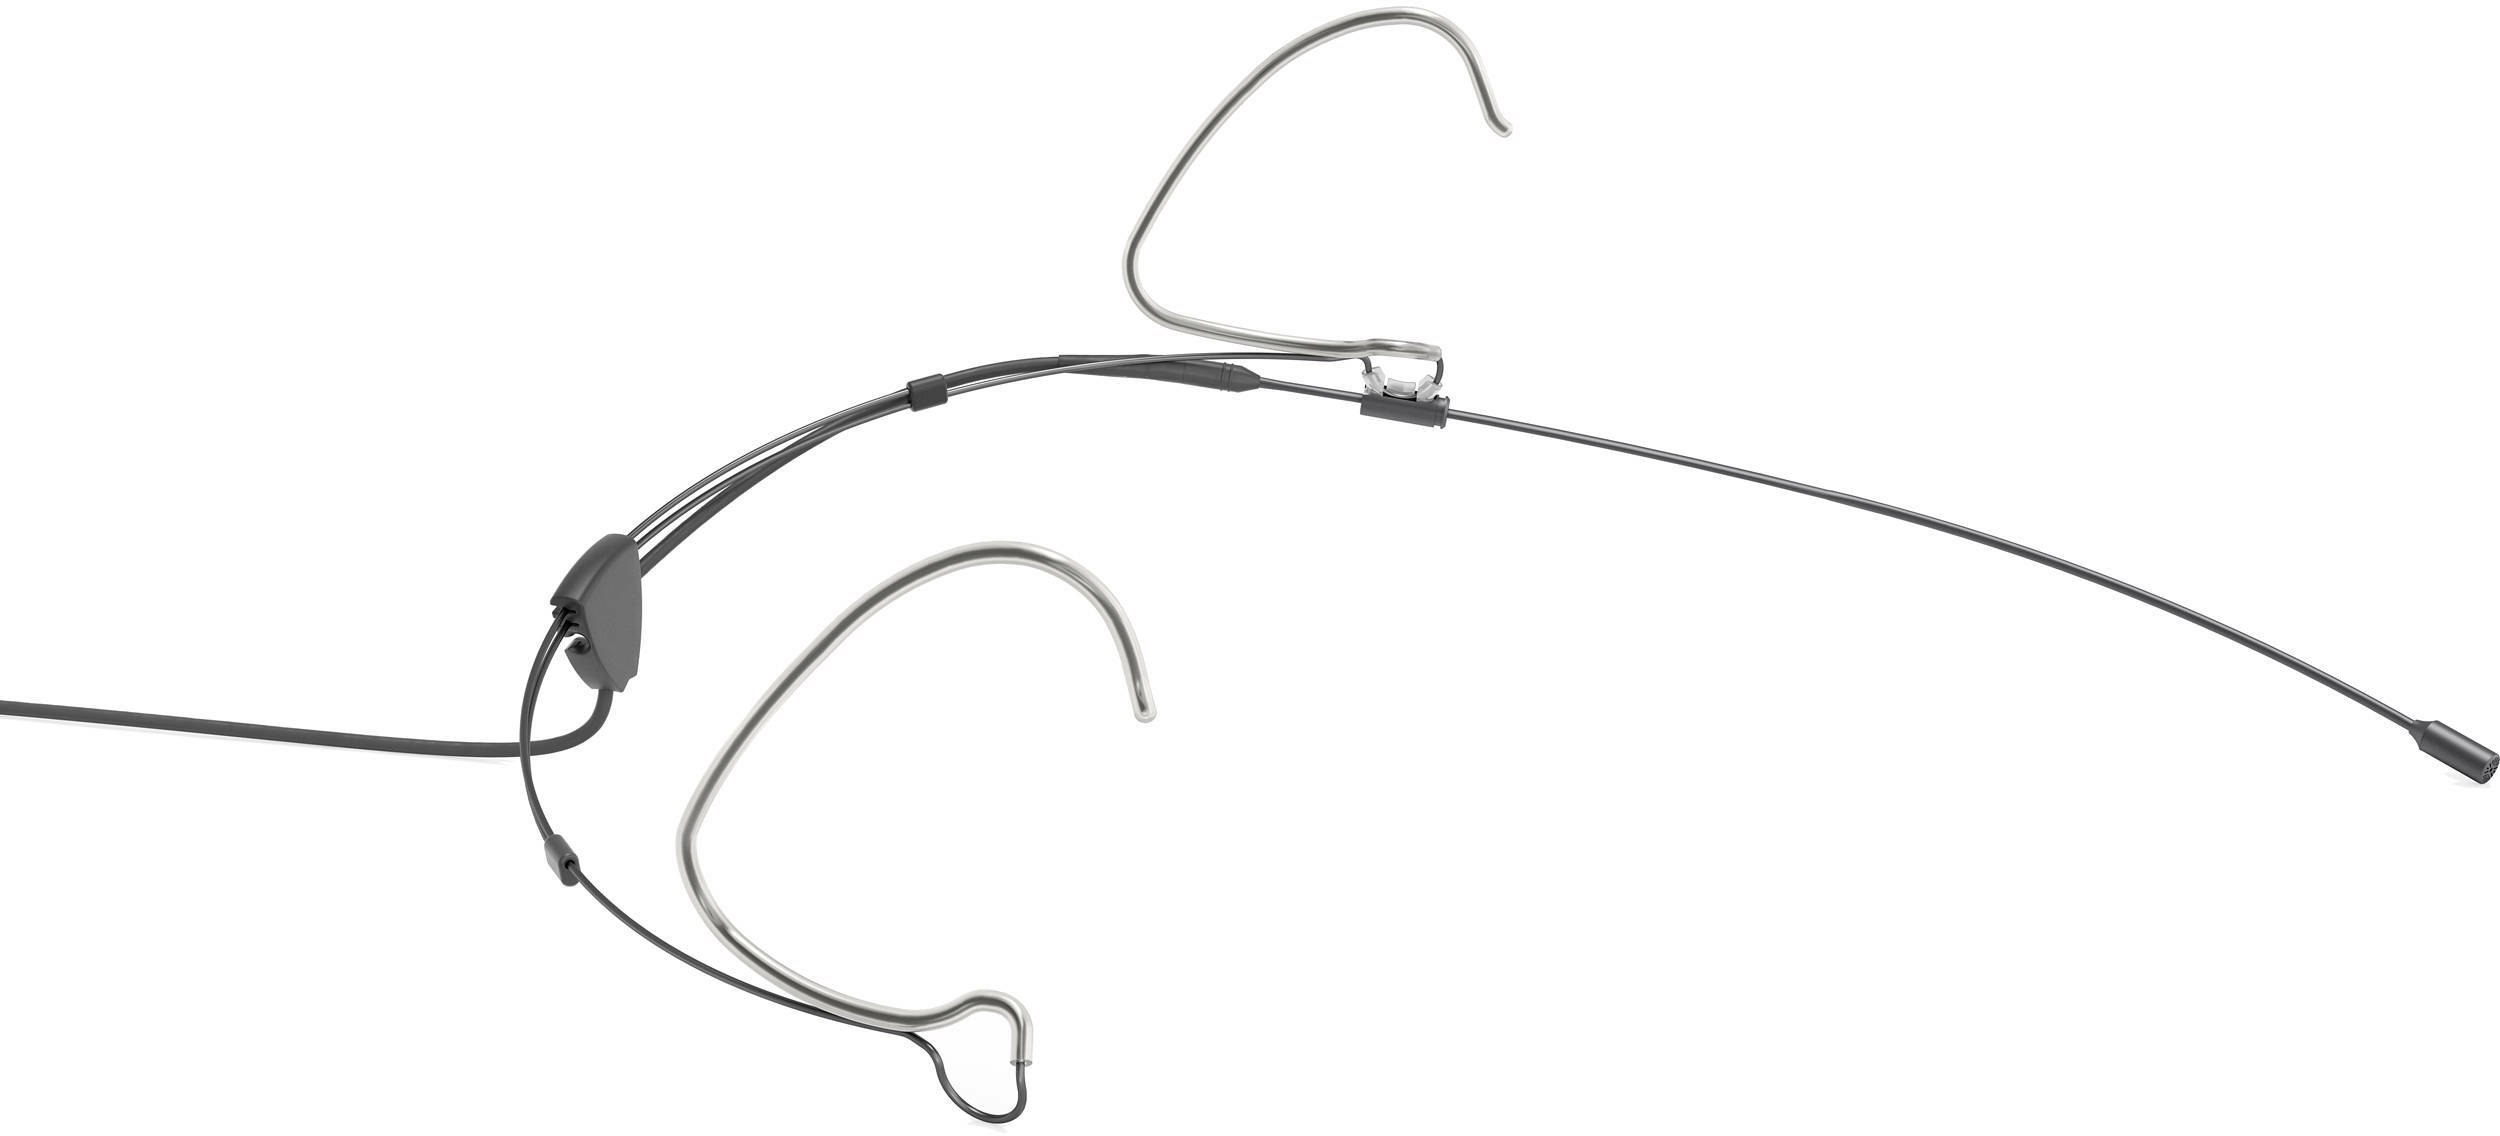 Dpa 6066(black) - Headset microphone - Main picture